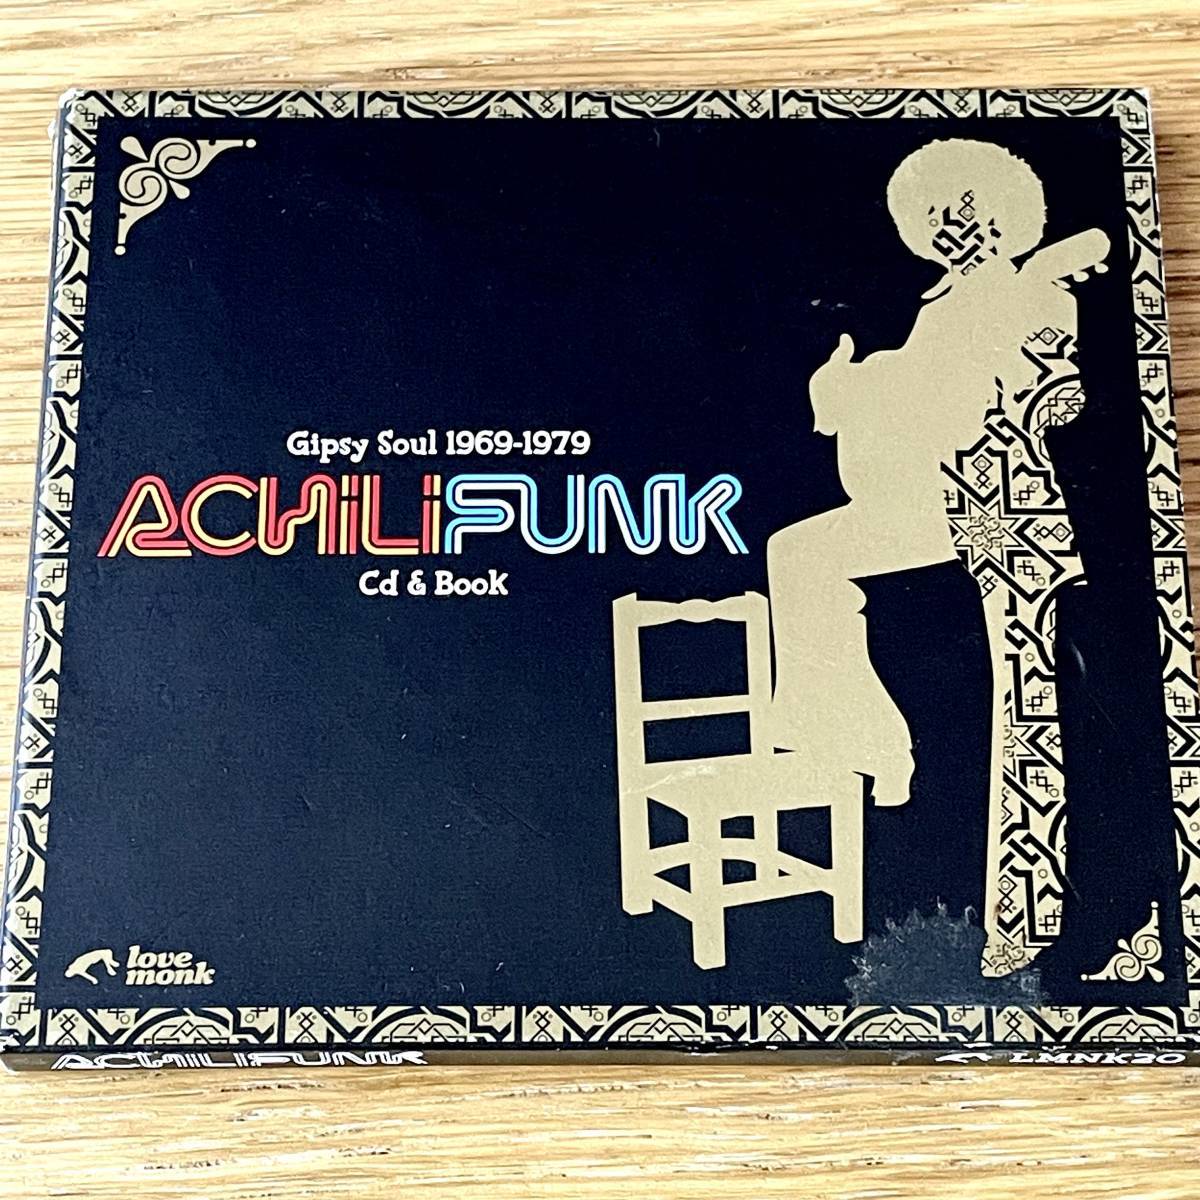 CD VA/Achilifunk Gipsy Soul 1969-1979 ラテンソウル サルサ ブーガルー latin funk salsa chicano boogaloo jazz charly caliente fania_画像1